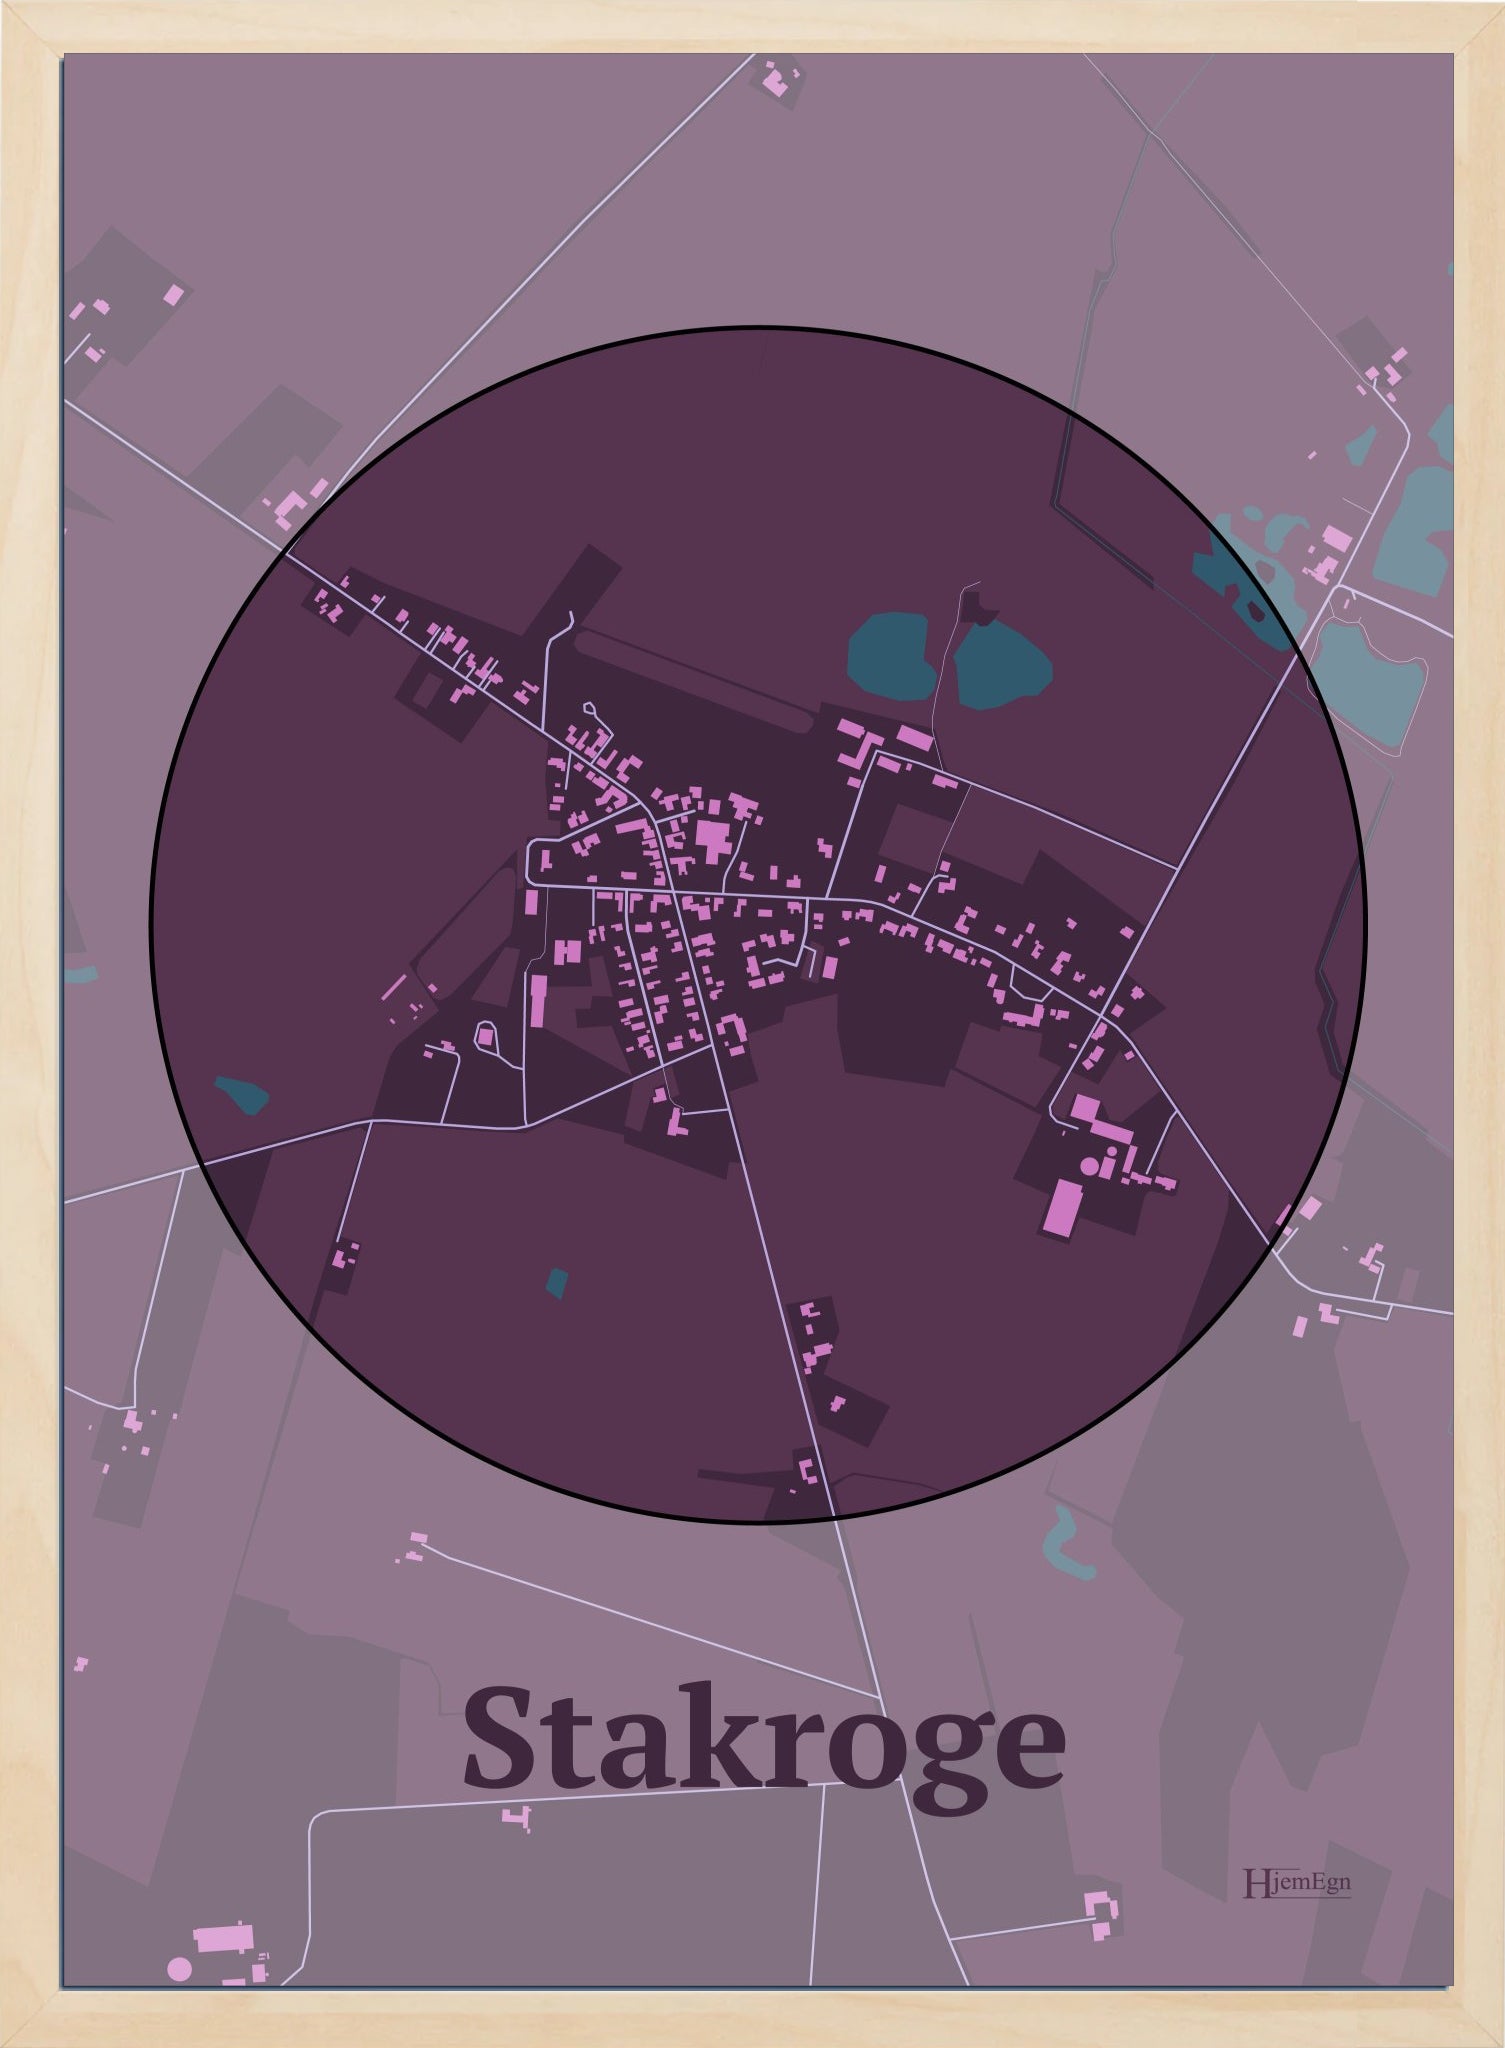 Stakroge plakat i farve mørk rød og HjemEgn.dk design centrum. Design bykort for Stakroge